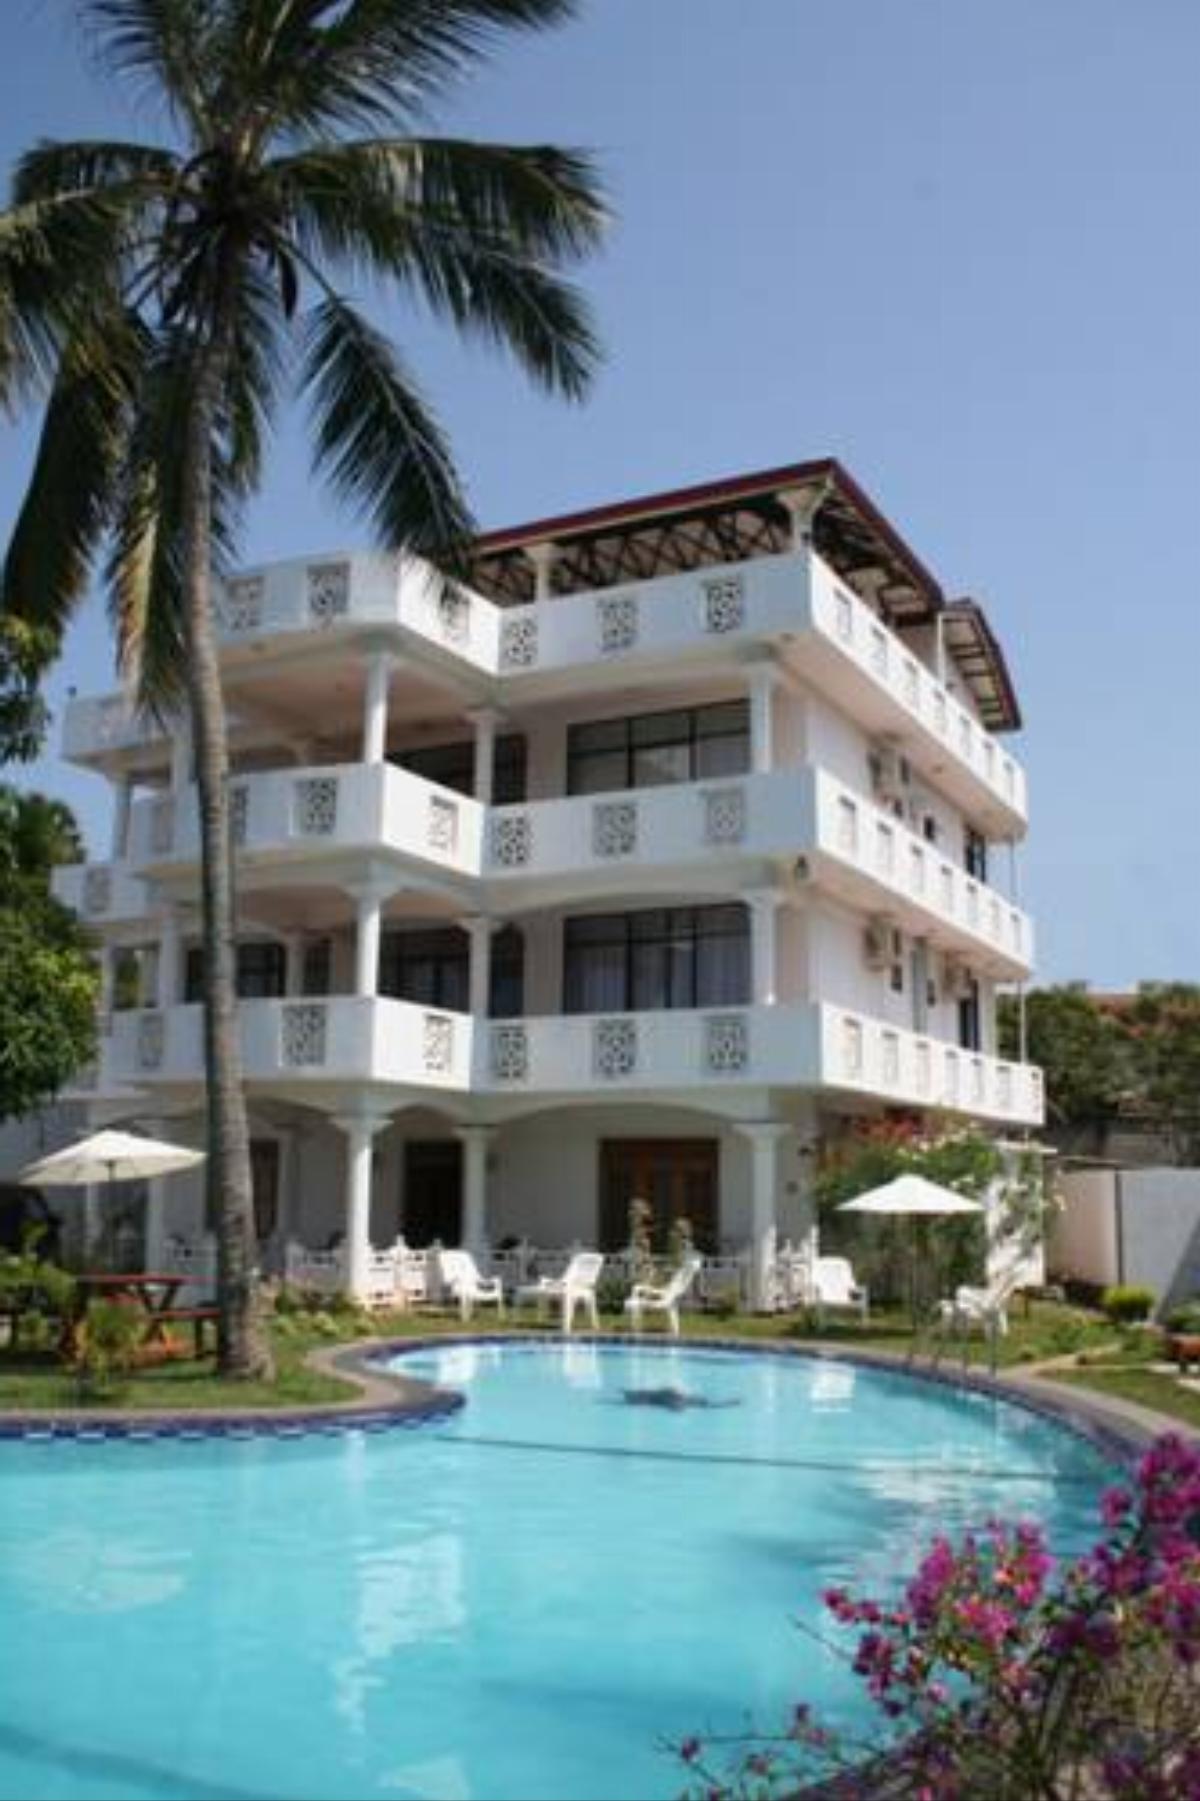 French Residence Hotel Tangalle Sri Lanka